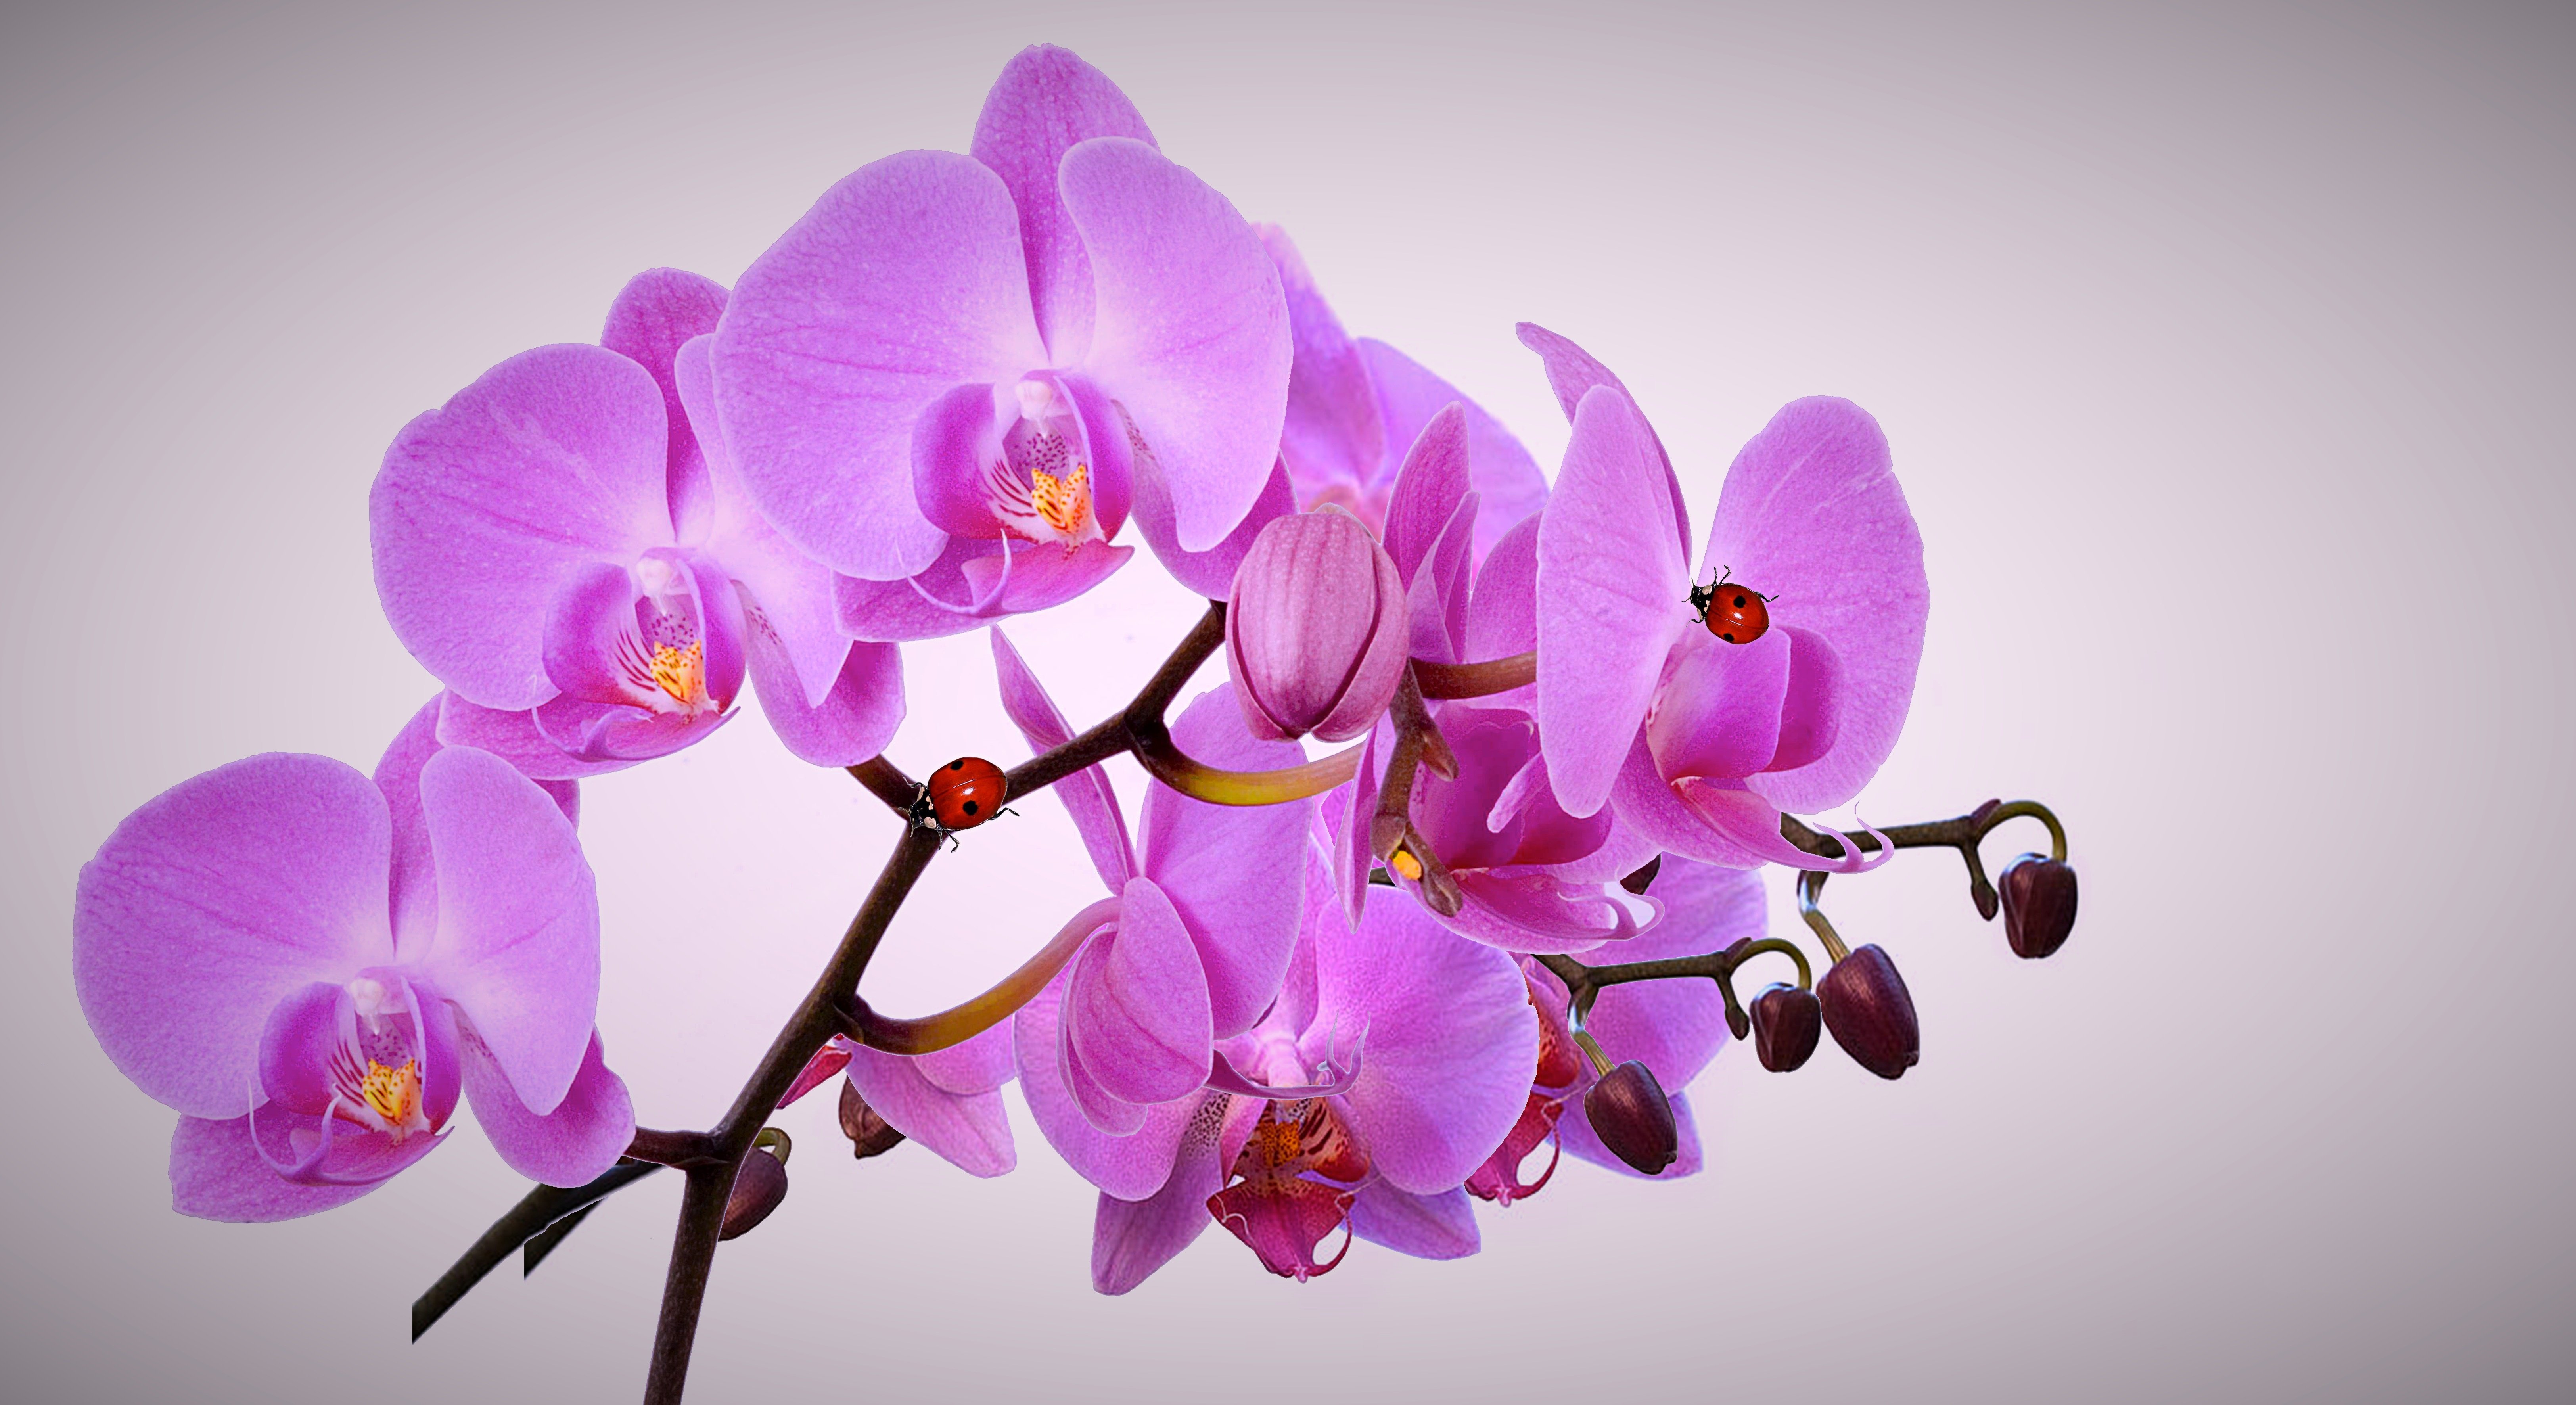 Flowers orchids. Фаленопсис Мальва. Орхидея Мальва фаленопсис. Орхидея фаленопсис фиолетовая. Фаленопсис сиреневый.